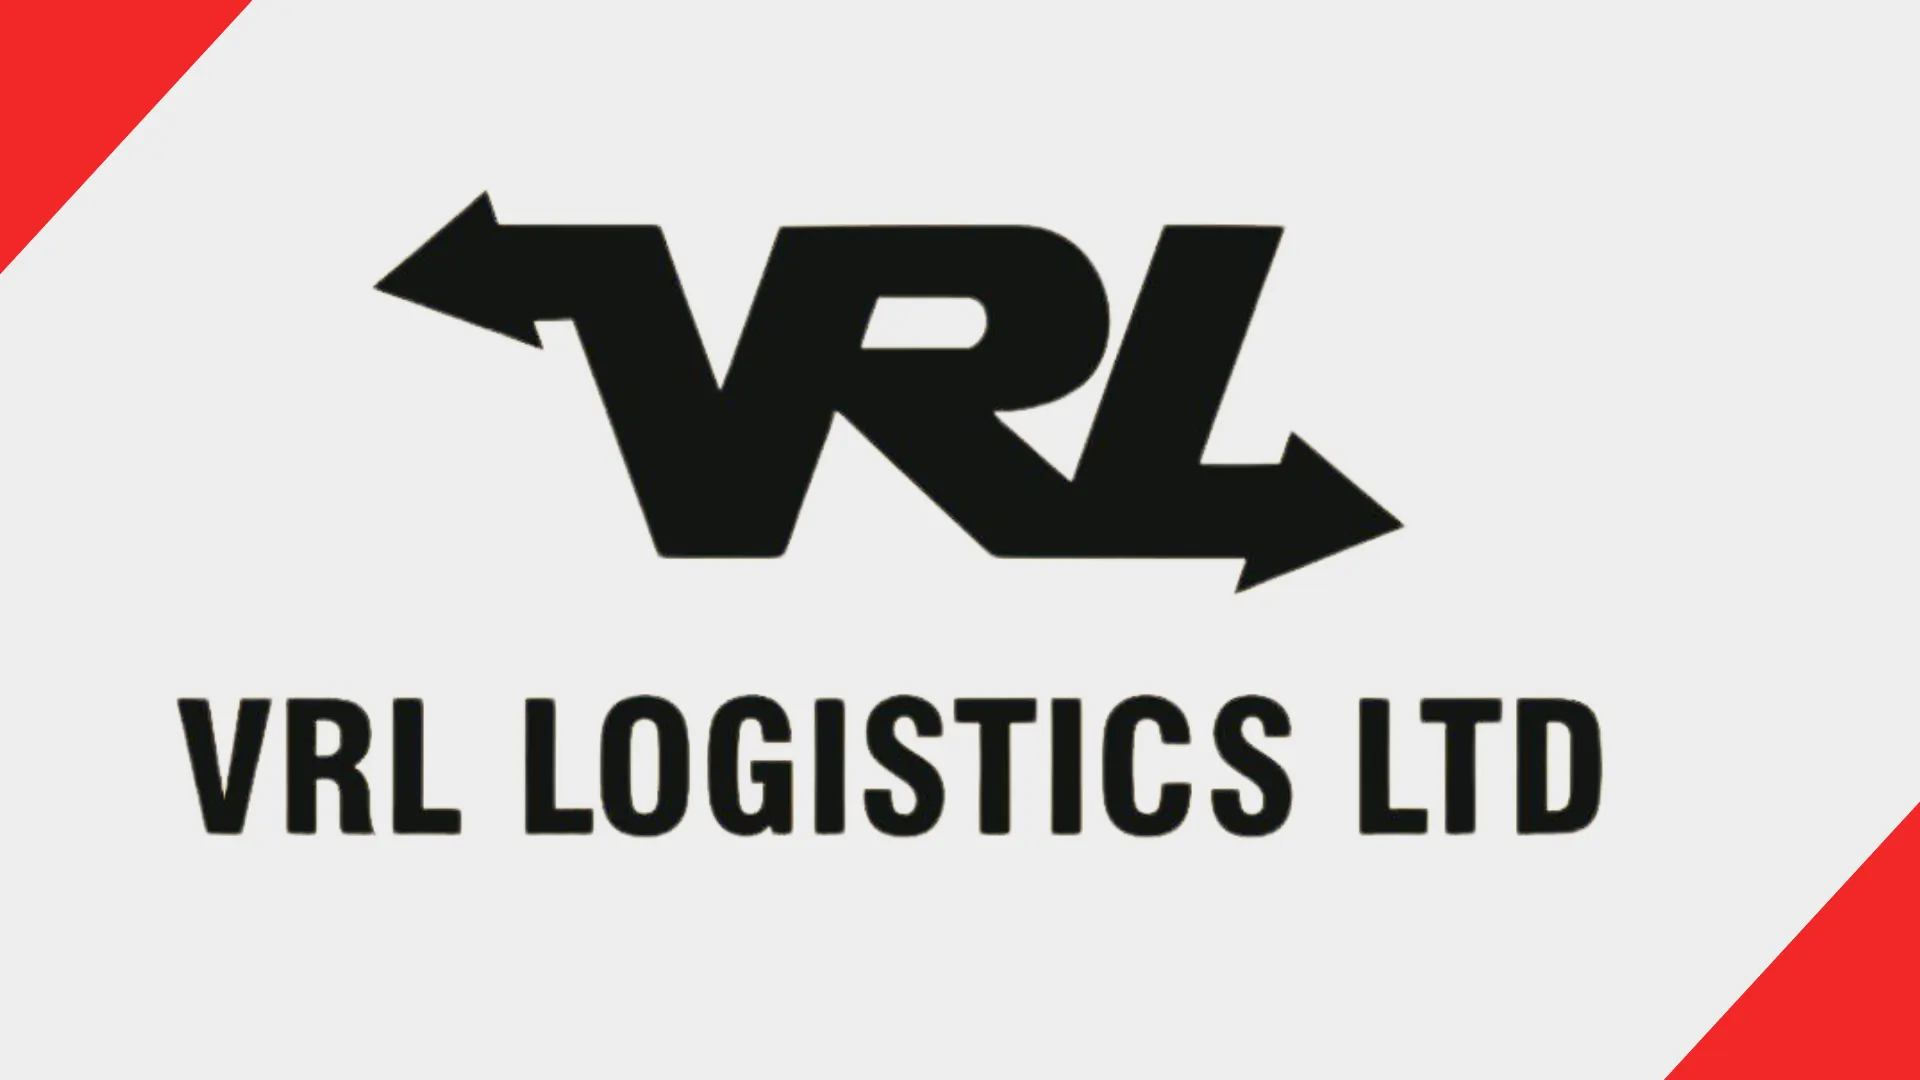 Logistics Companies in Hyderabad